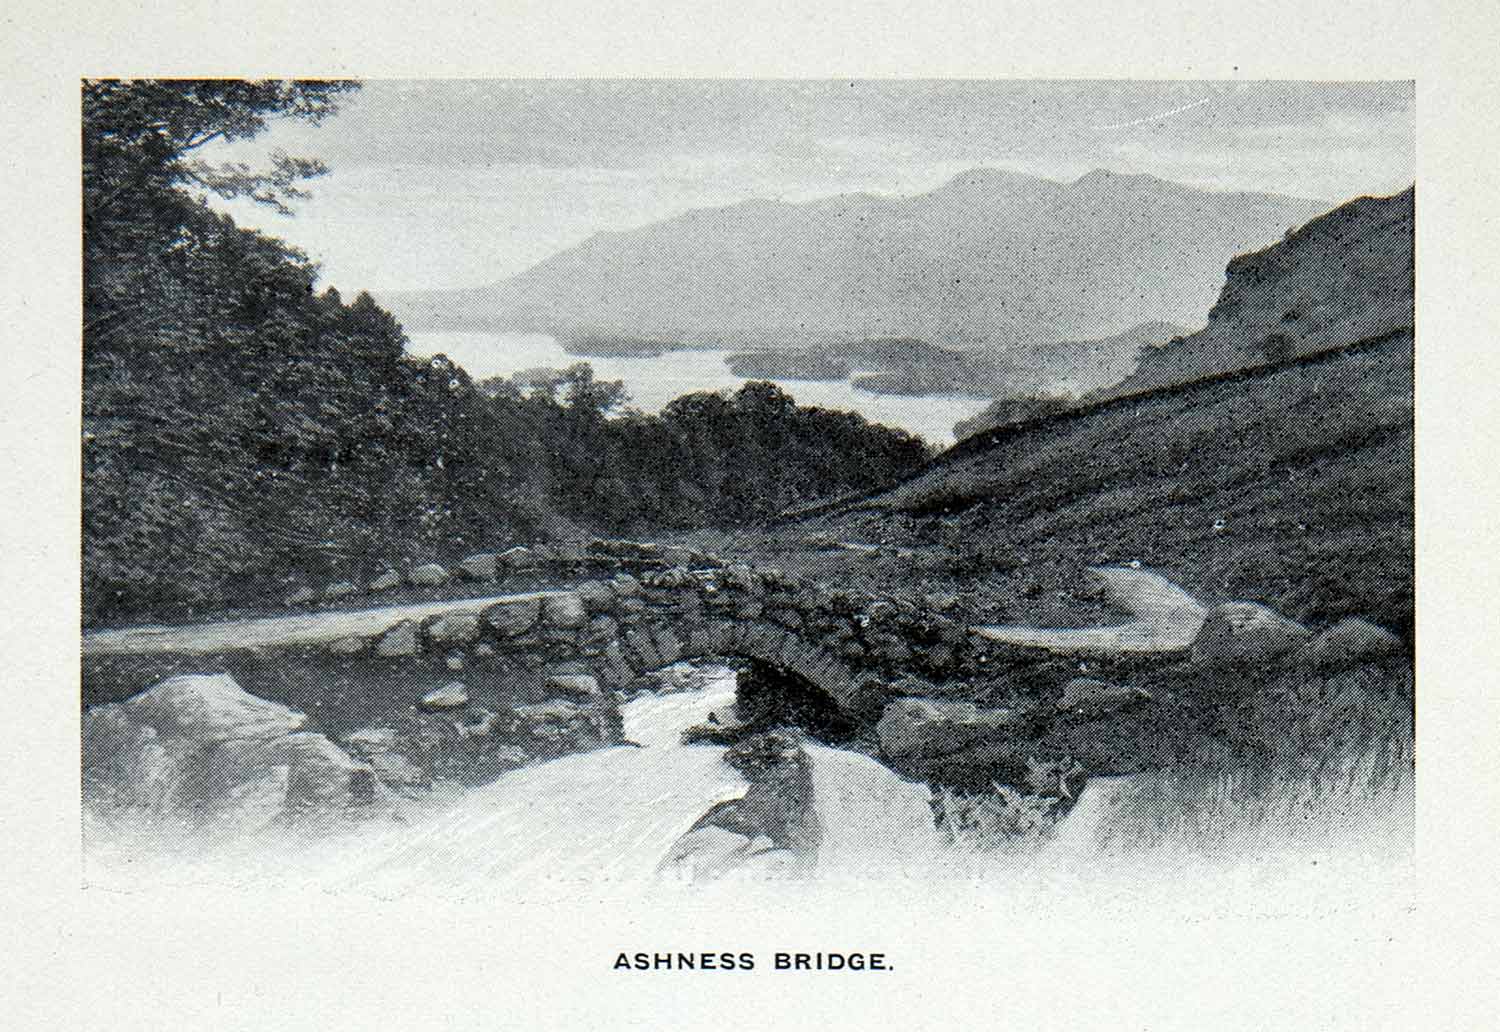 1912 Print Stone Ashness Bridge Cumbria Landscape English Lake District XGCA7